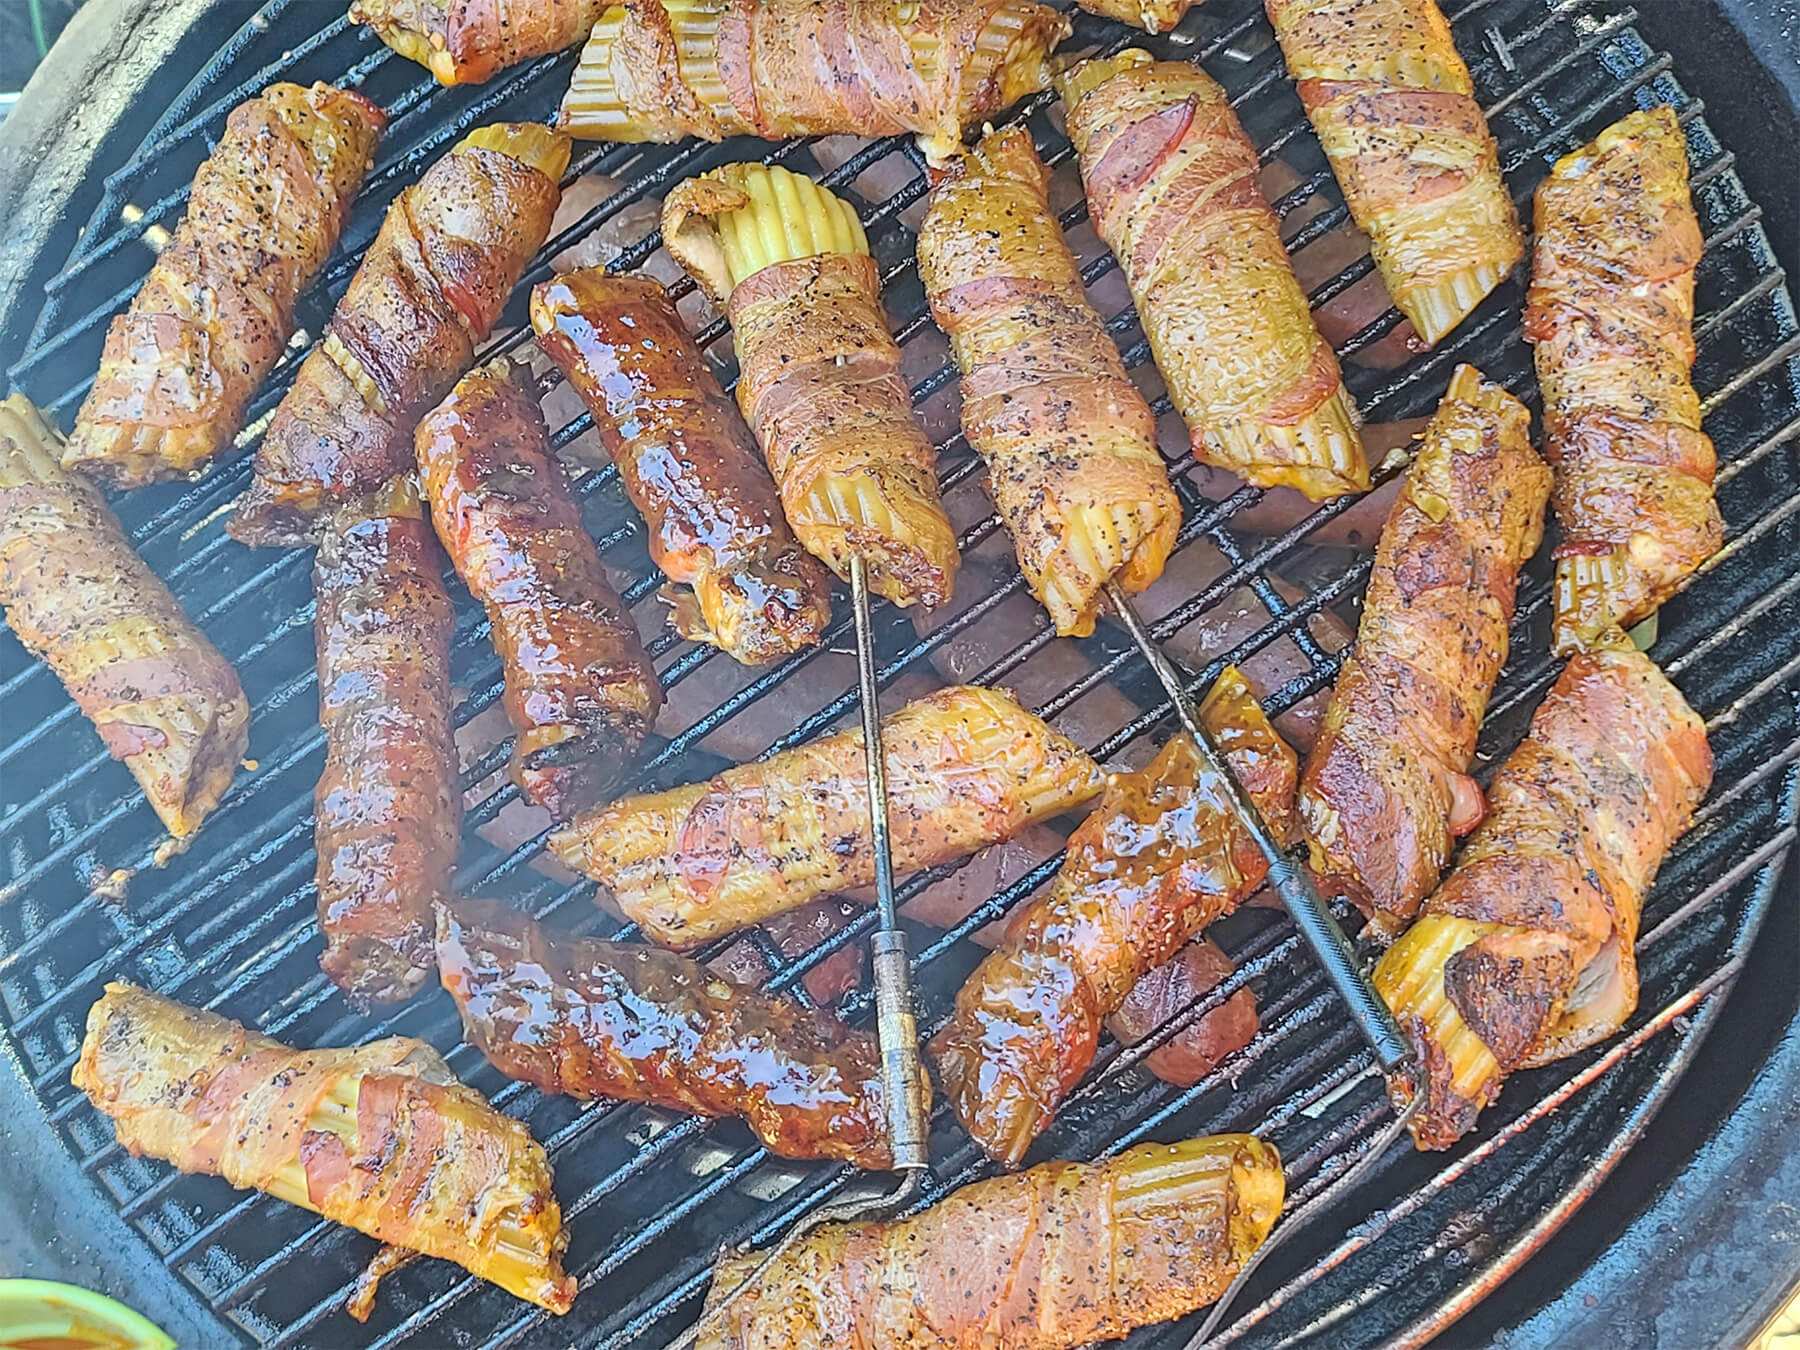 Smoked Shotgun Shells Recipe (Don't Skip The Barbecue Sauce!)